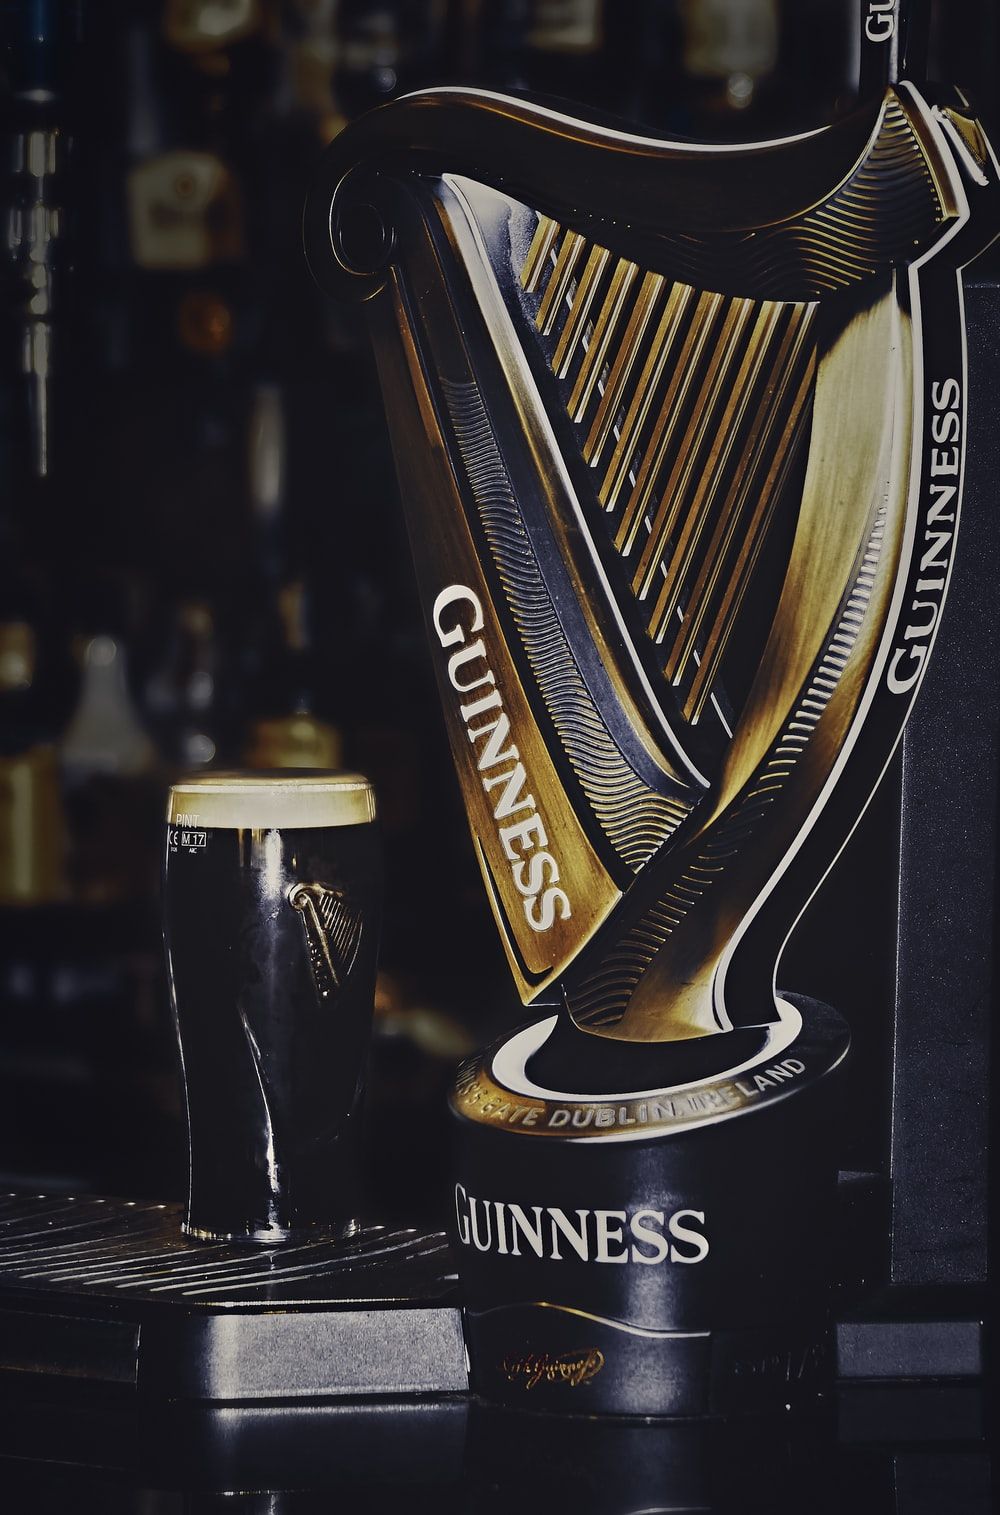 Irish Pub Picture. Download Free Image